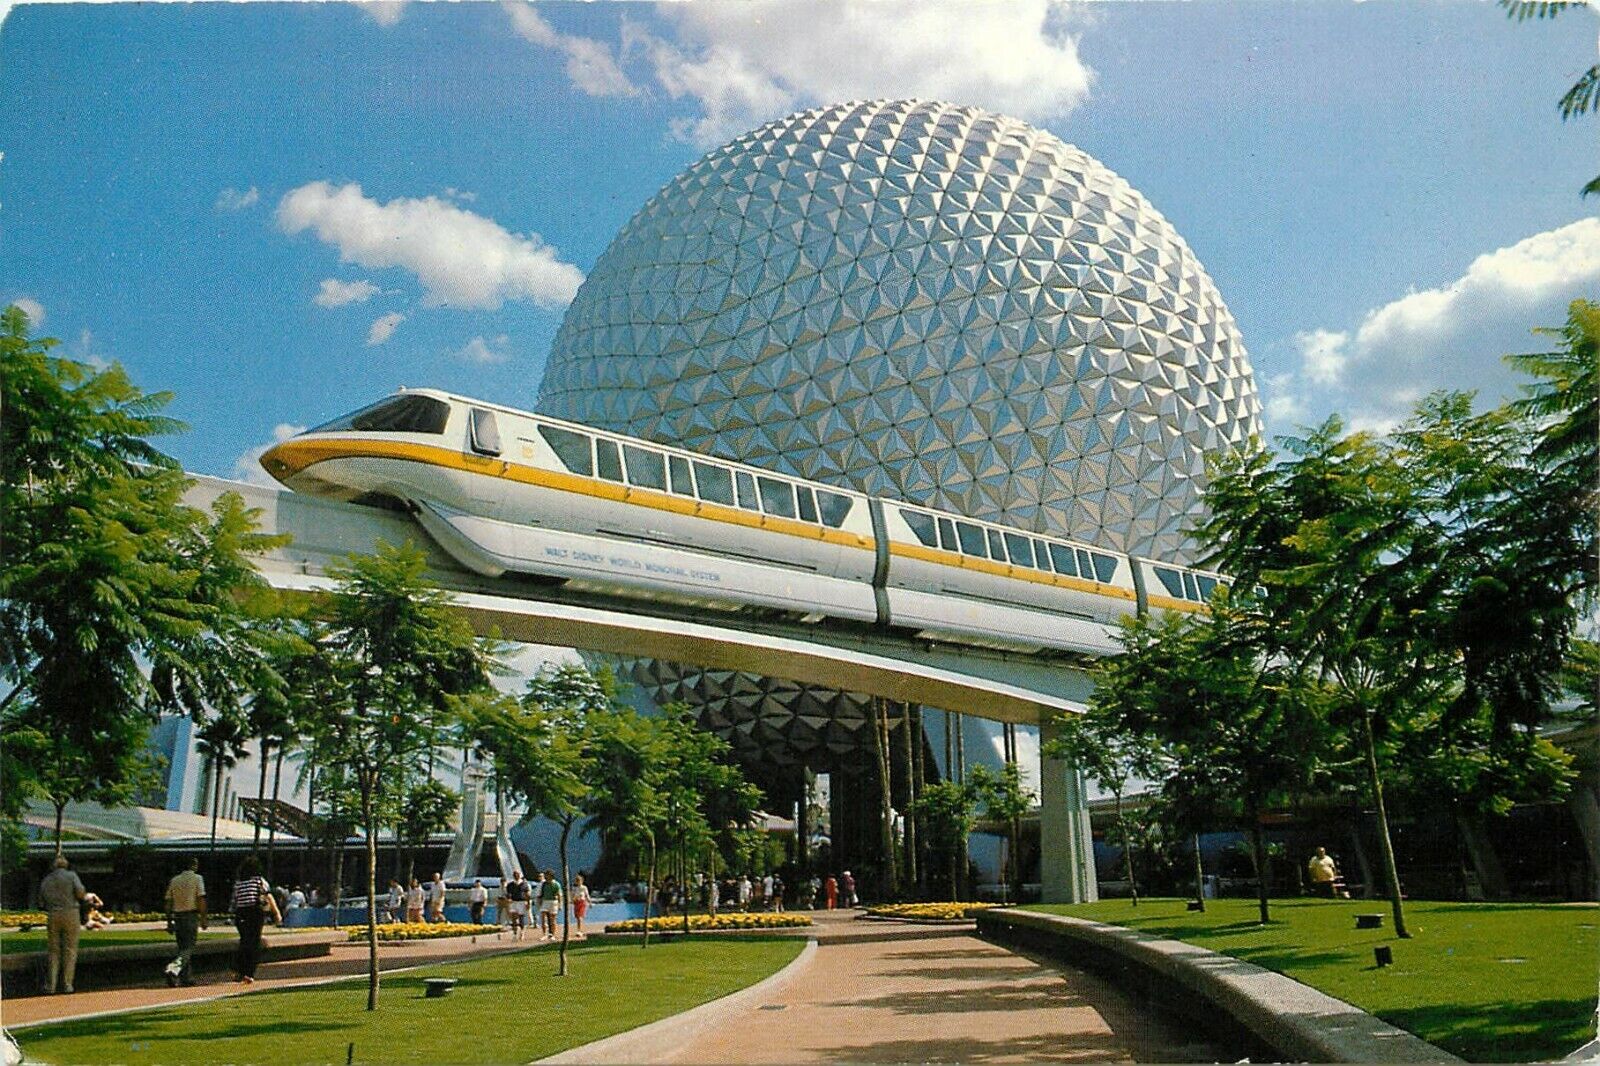 Spaceship Earth Monorail Epcot Disney World pm 1986 Orlando Florida FL Postcard